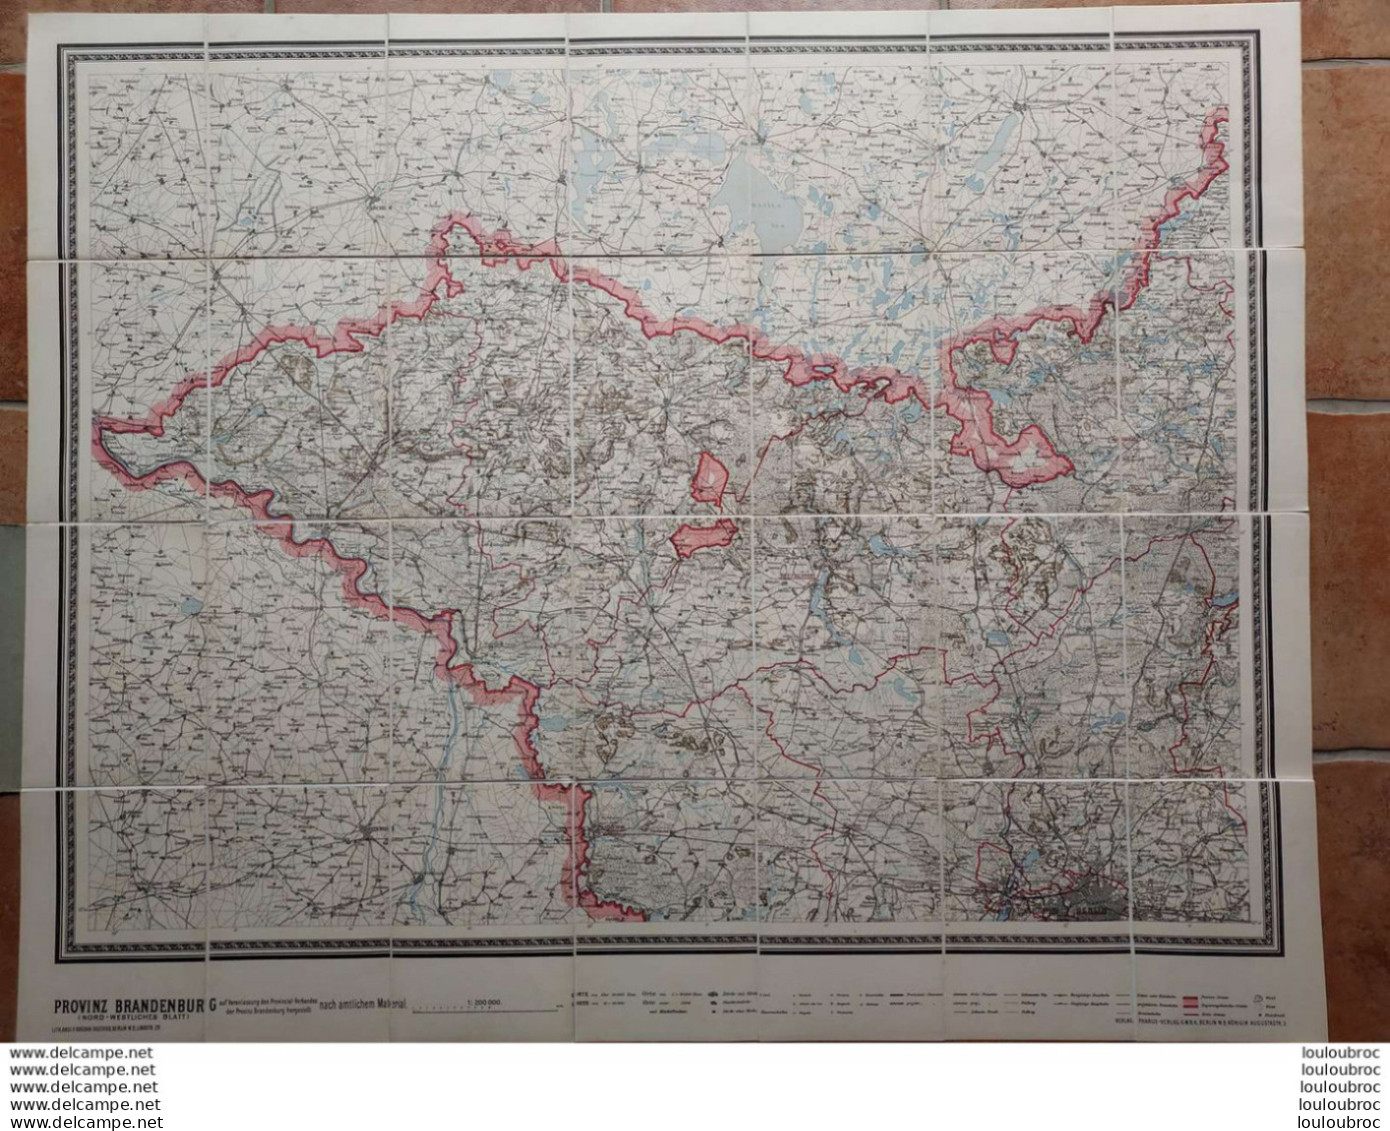 CARTE TOILEE PROVINZ BRANDENBURG  PHARUSKARTE PARFAIT ETAT FORMAT 94 X 75 CM - Geographical Maps